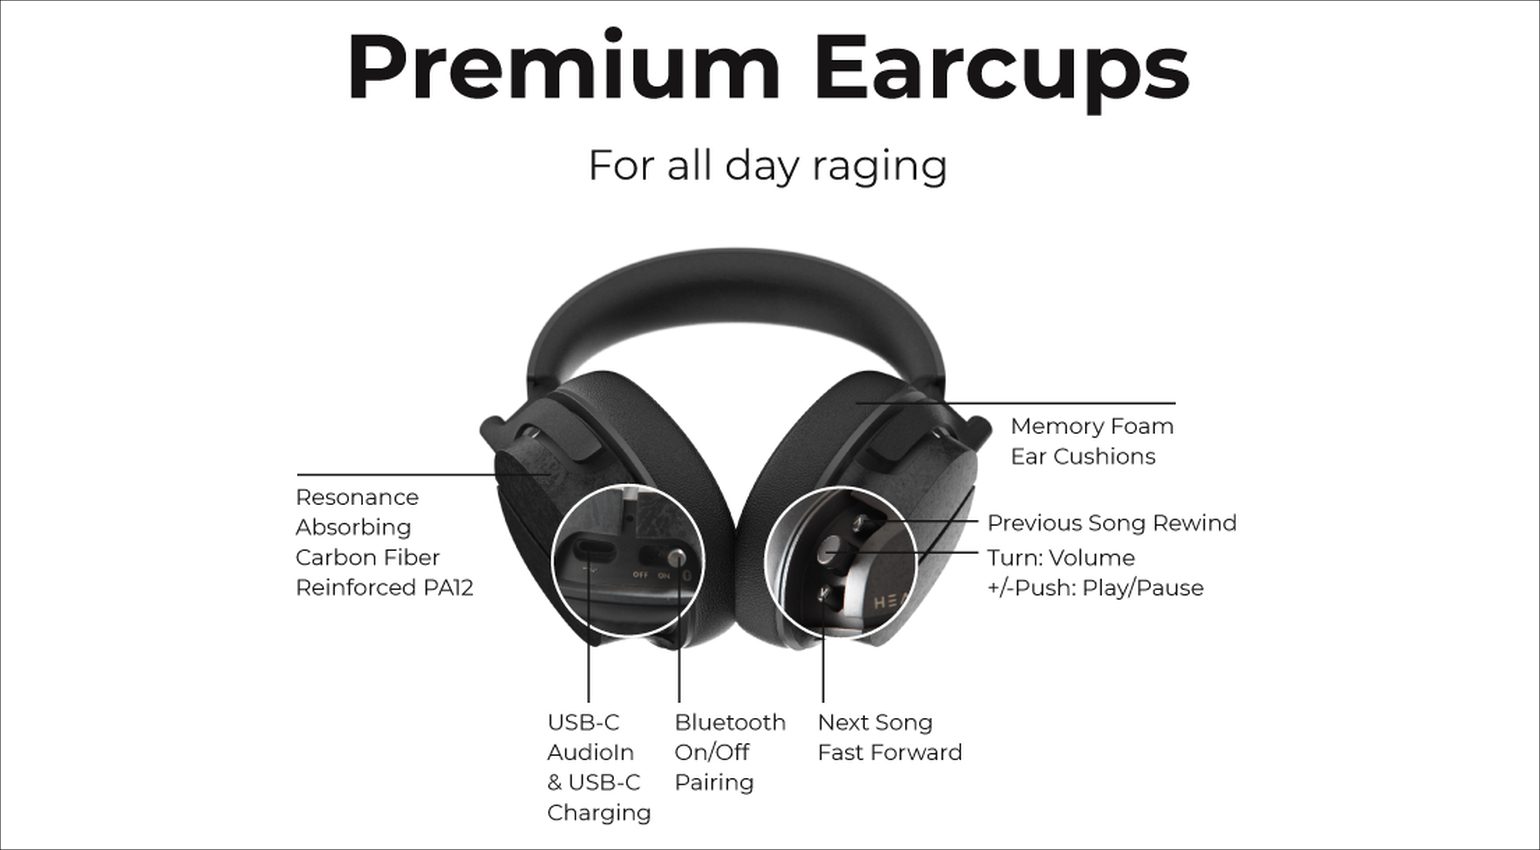 Headbangen mit HEAVYS: Over-Ear-Kopfhörer speziell für Heavy Metal